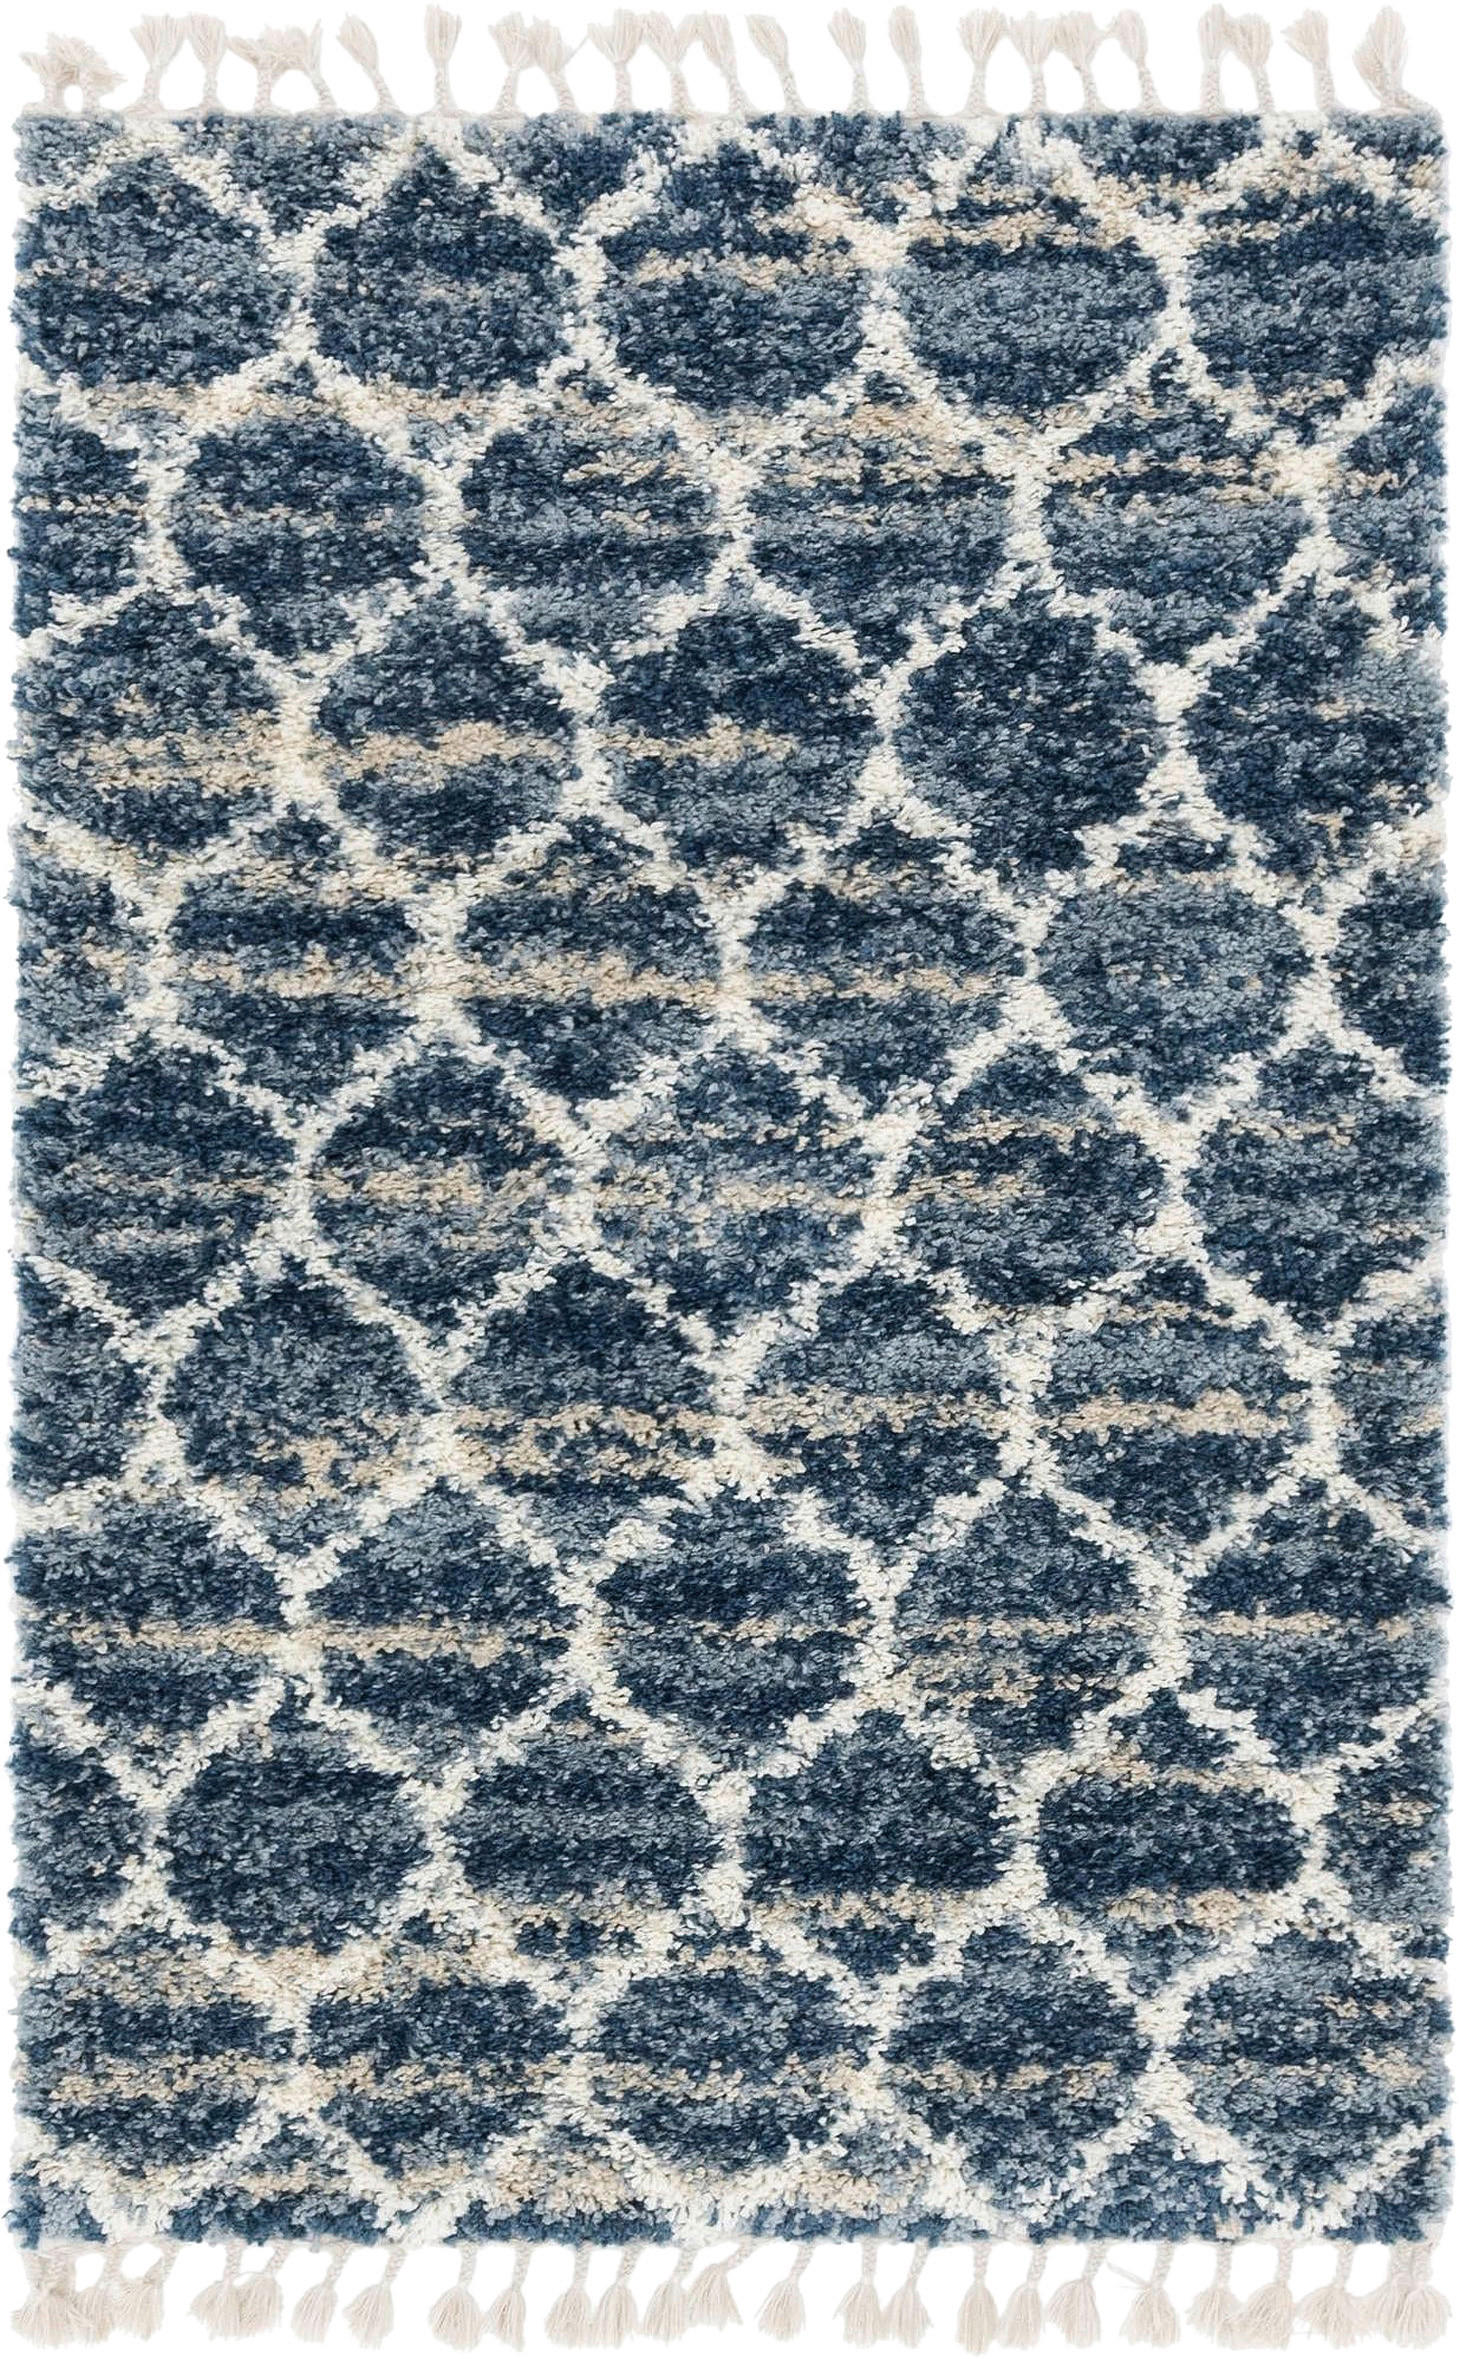 WEBTEPPICH 120/185 cm  - Blau, Basics, Textil (120/185cm)